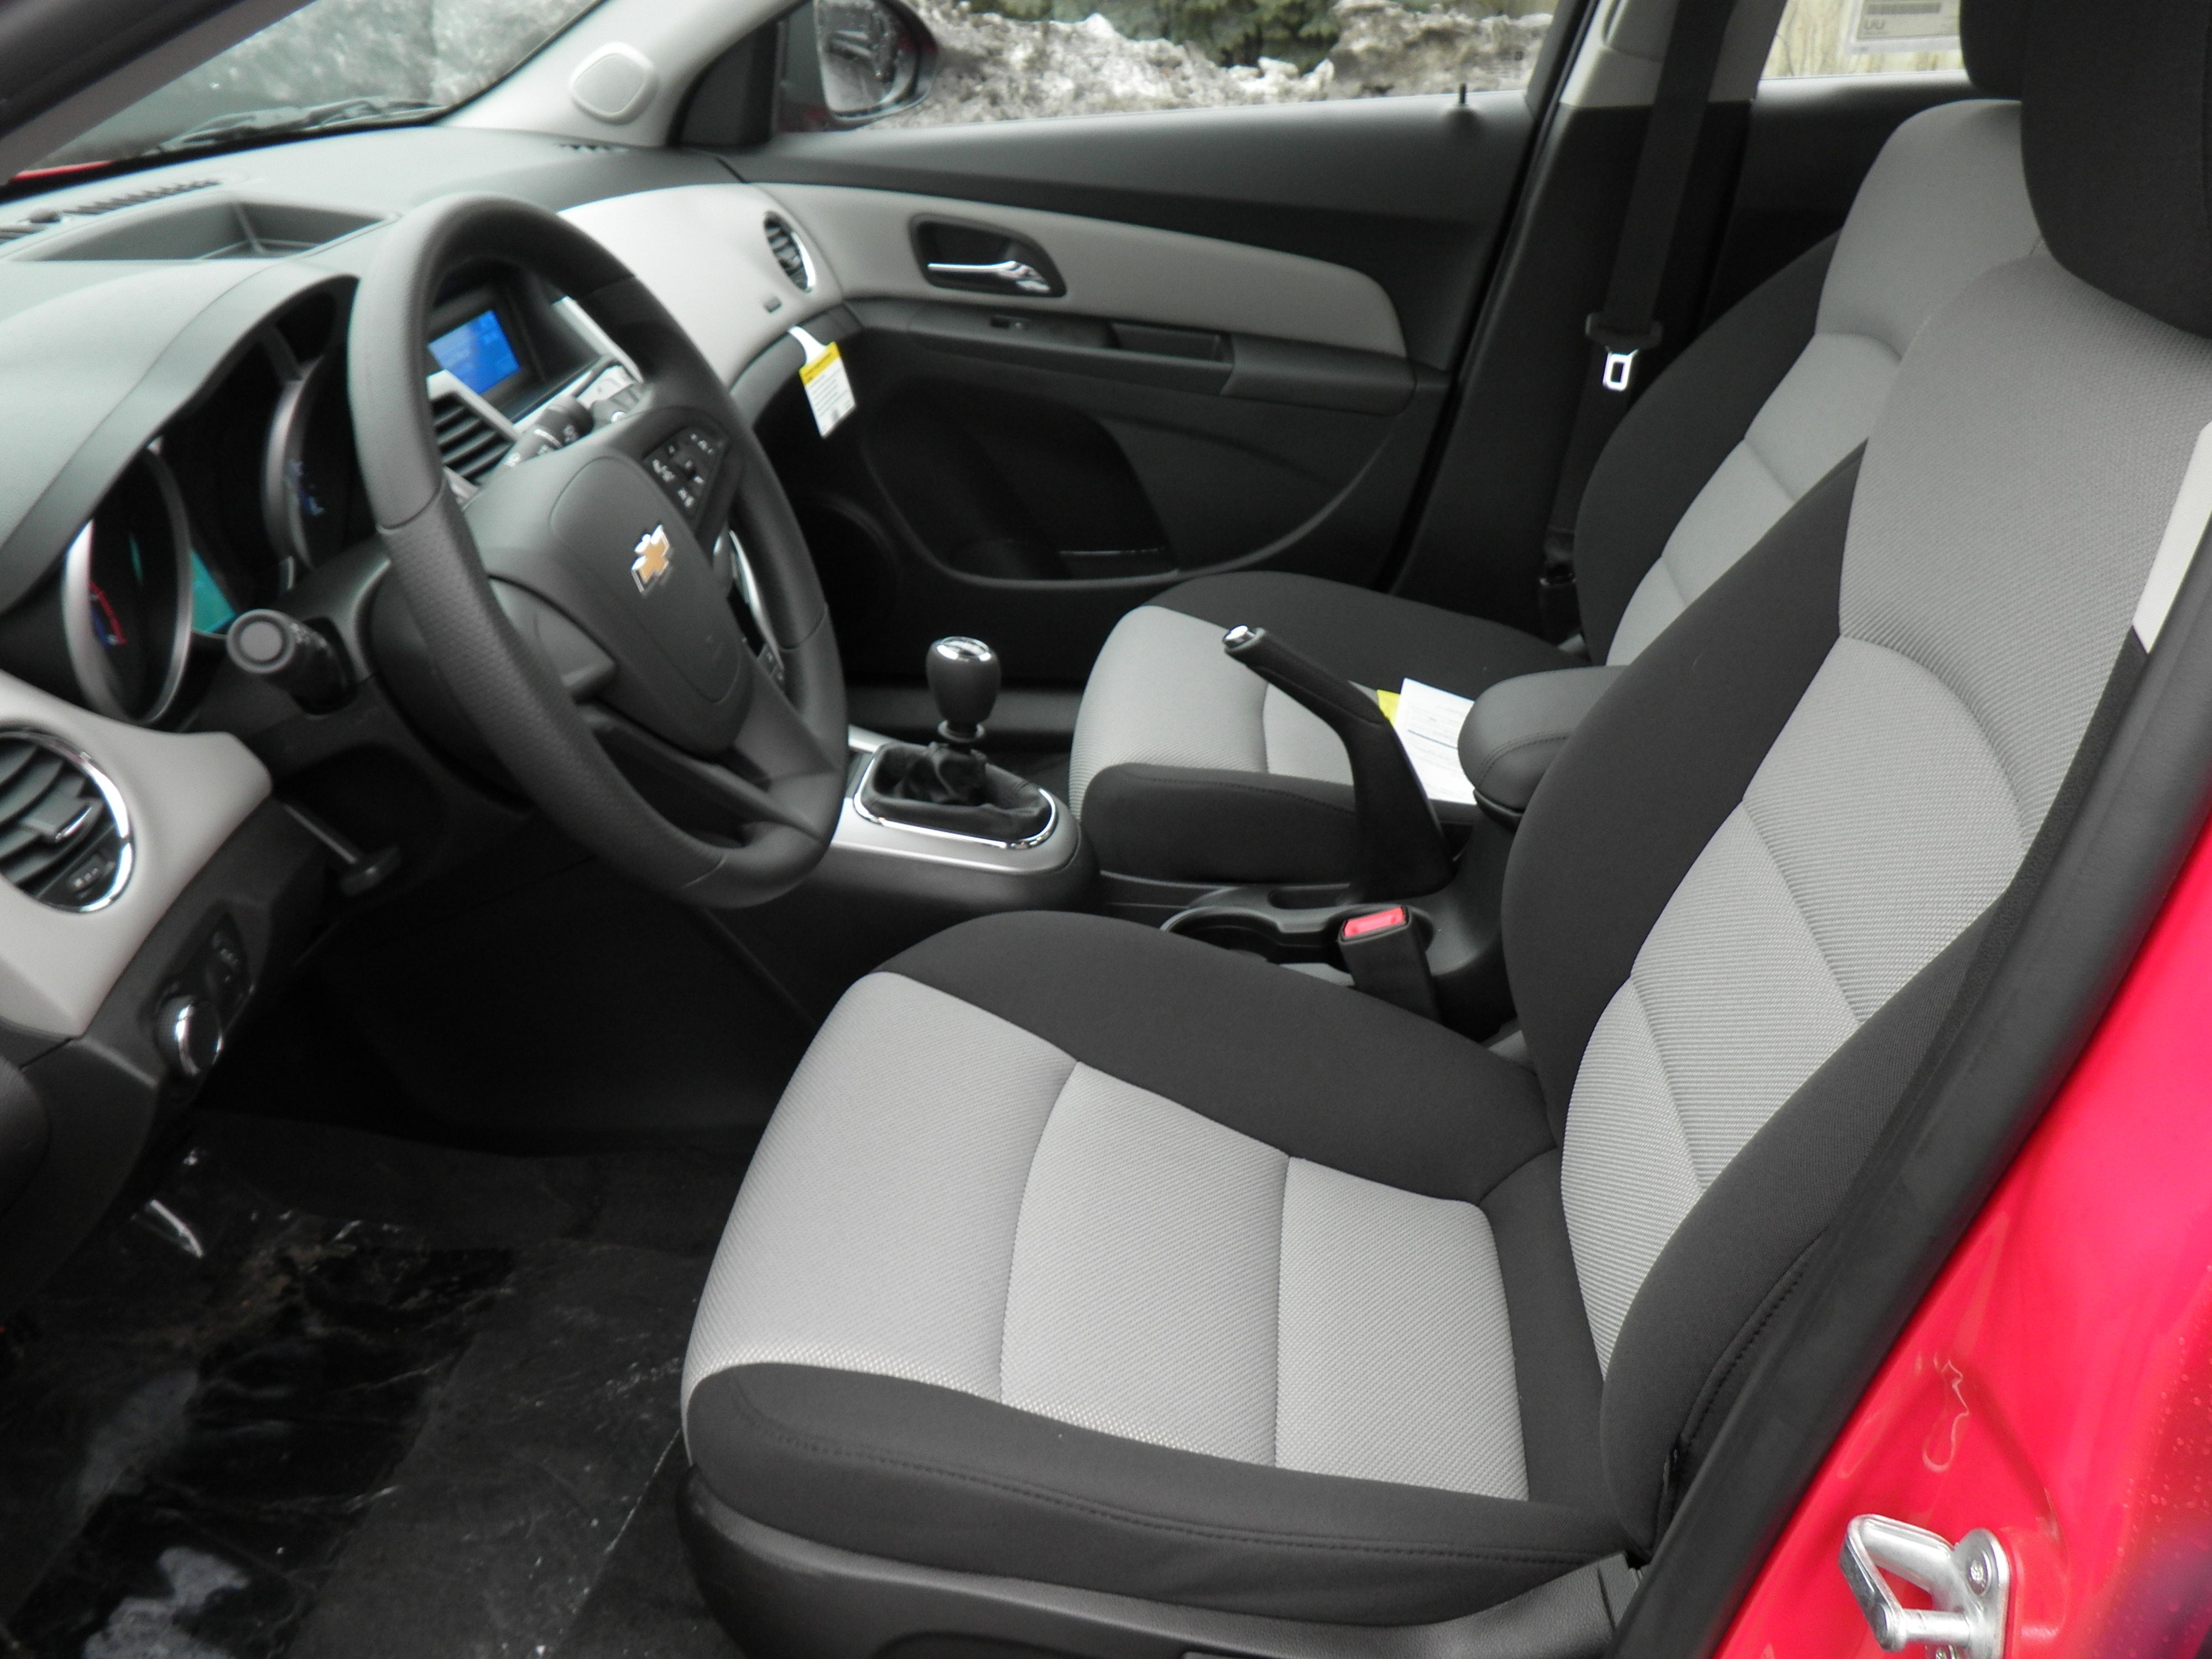 2014 #Chevrolet #Cruze interior with #manual #transmission  http://www.phillipschevy.com/ | Chevrolet cruze, Cruze, Chevrolet 2017